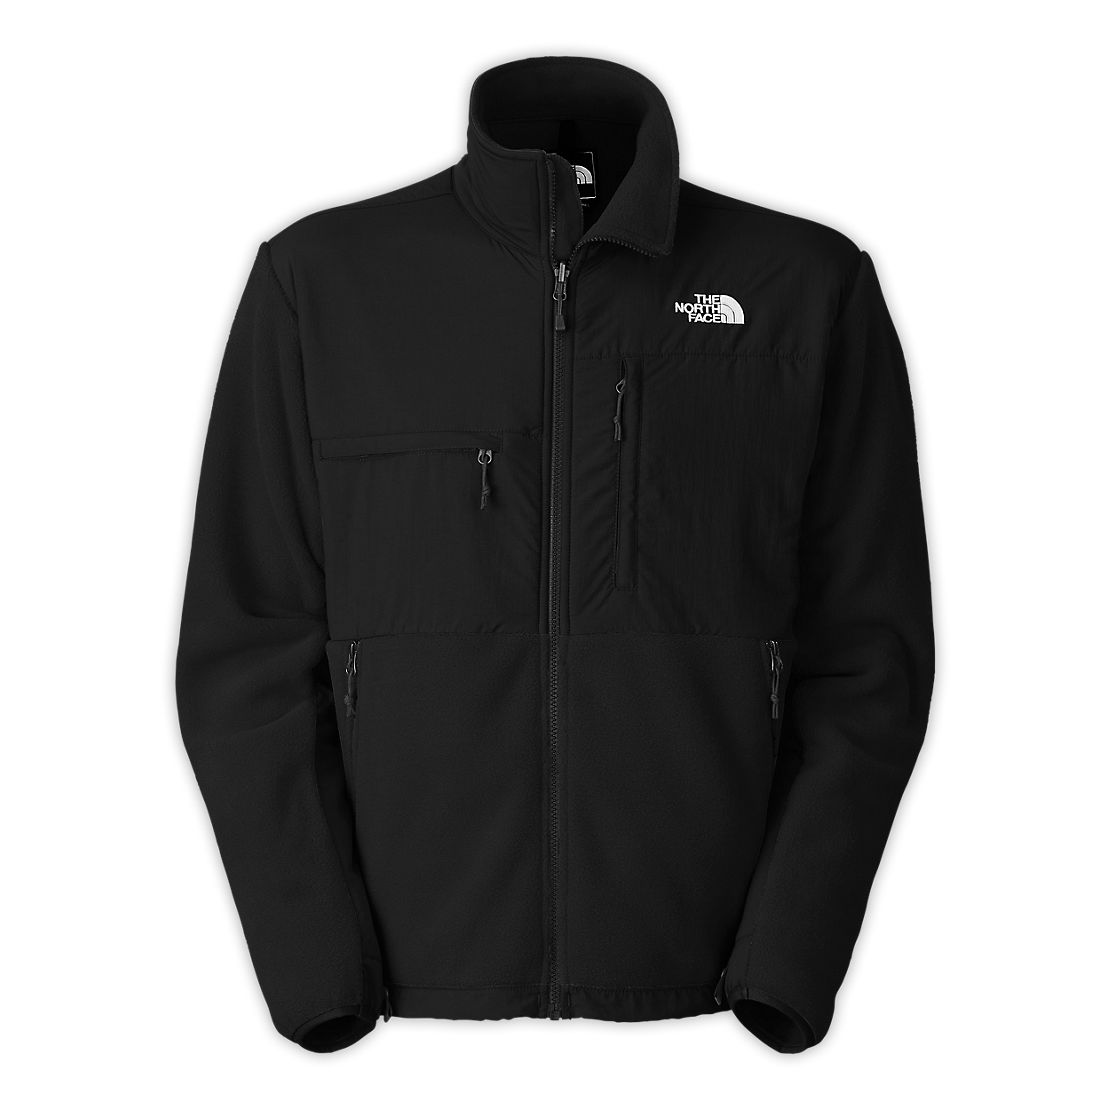 Shop Men's Fleece Denali Jacket - The North Face